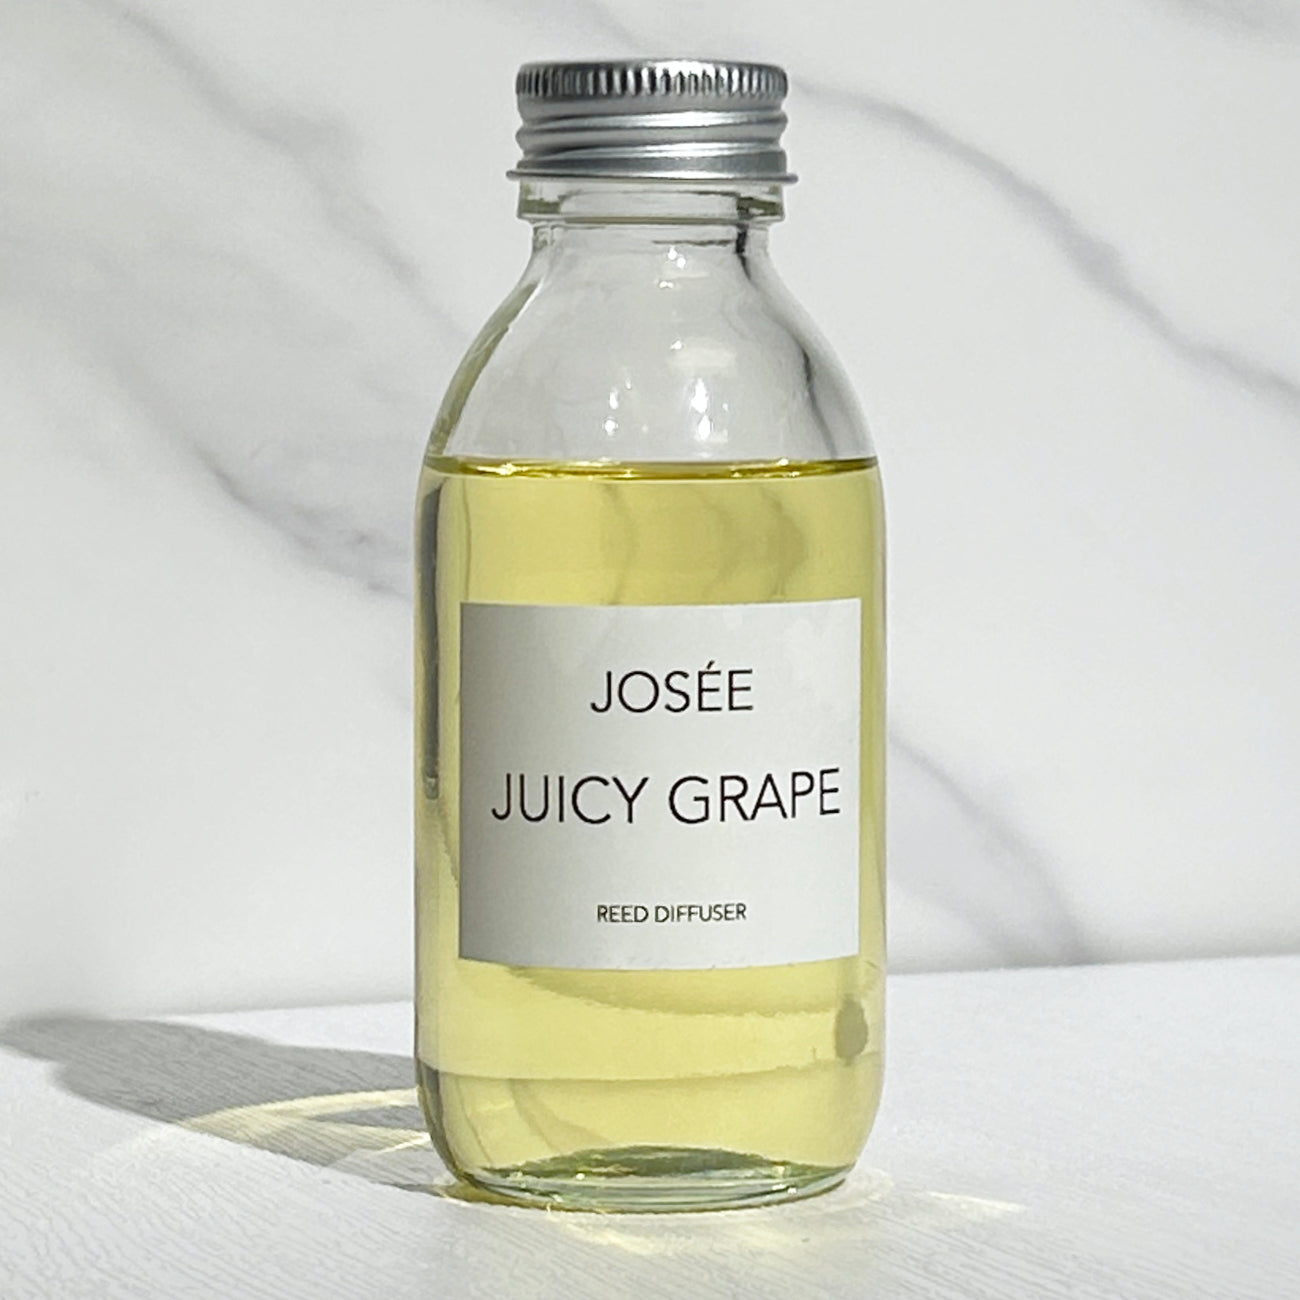 Juicy Grape Reed Diffuser